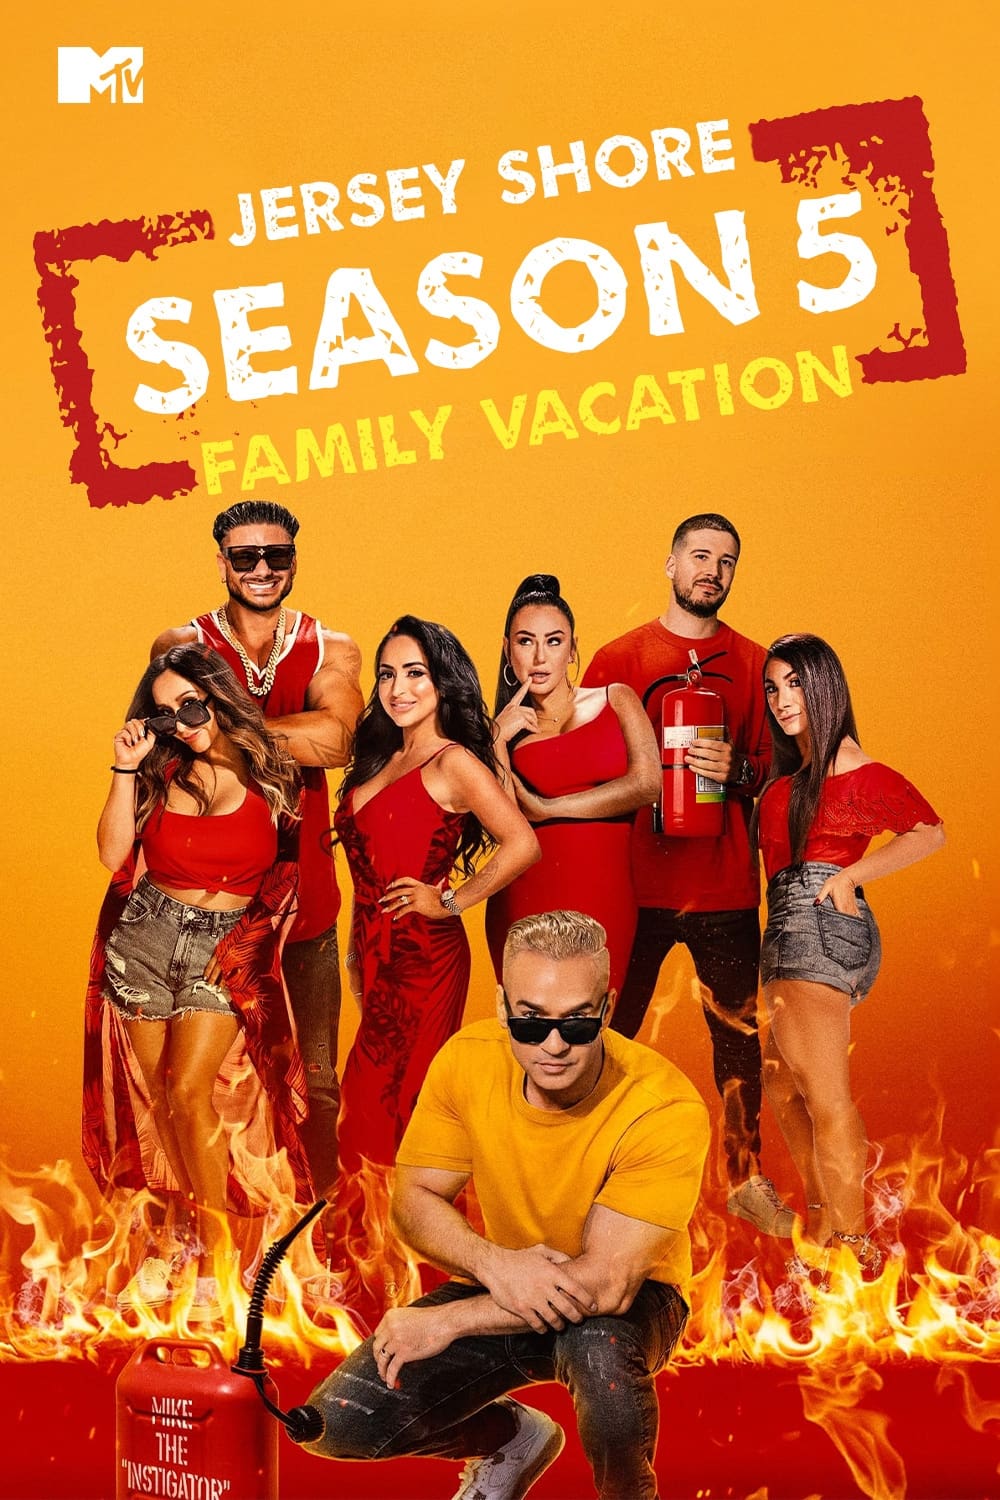 naaien Contour Terug kijken Watch Jersey Shore: Family Vacation · Season 5 Full Episodes Free Online -  Plex